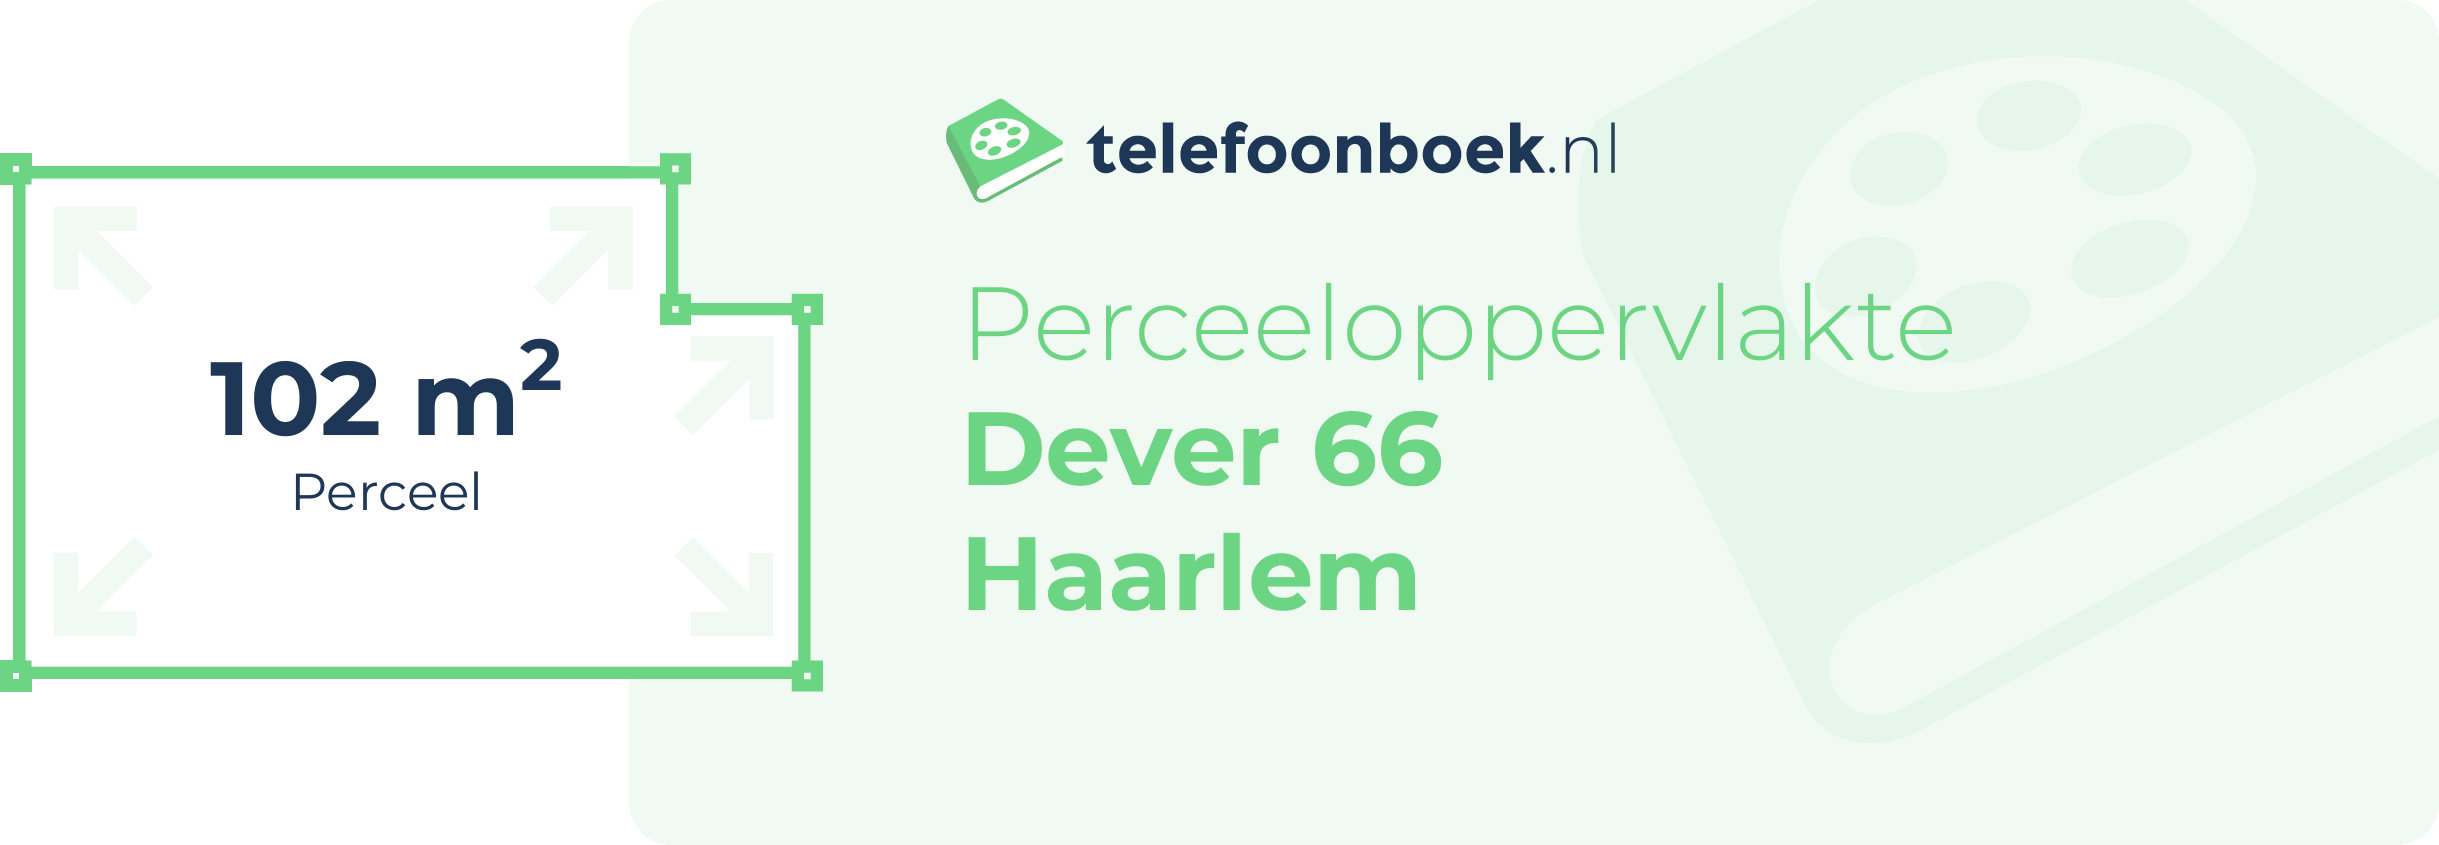 Perceeloppervlakte Dever 66 Haarlem